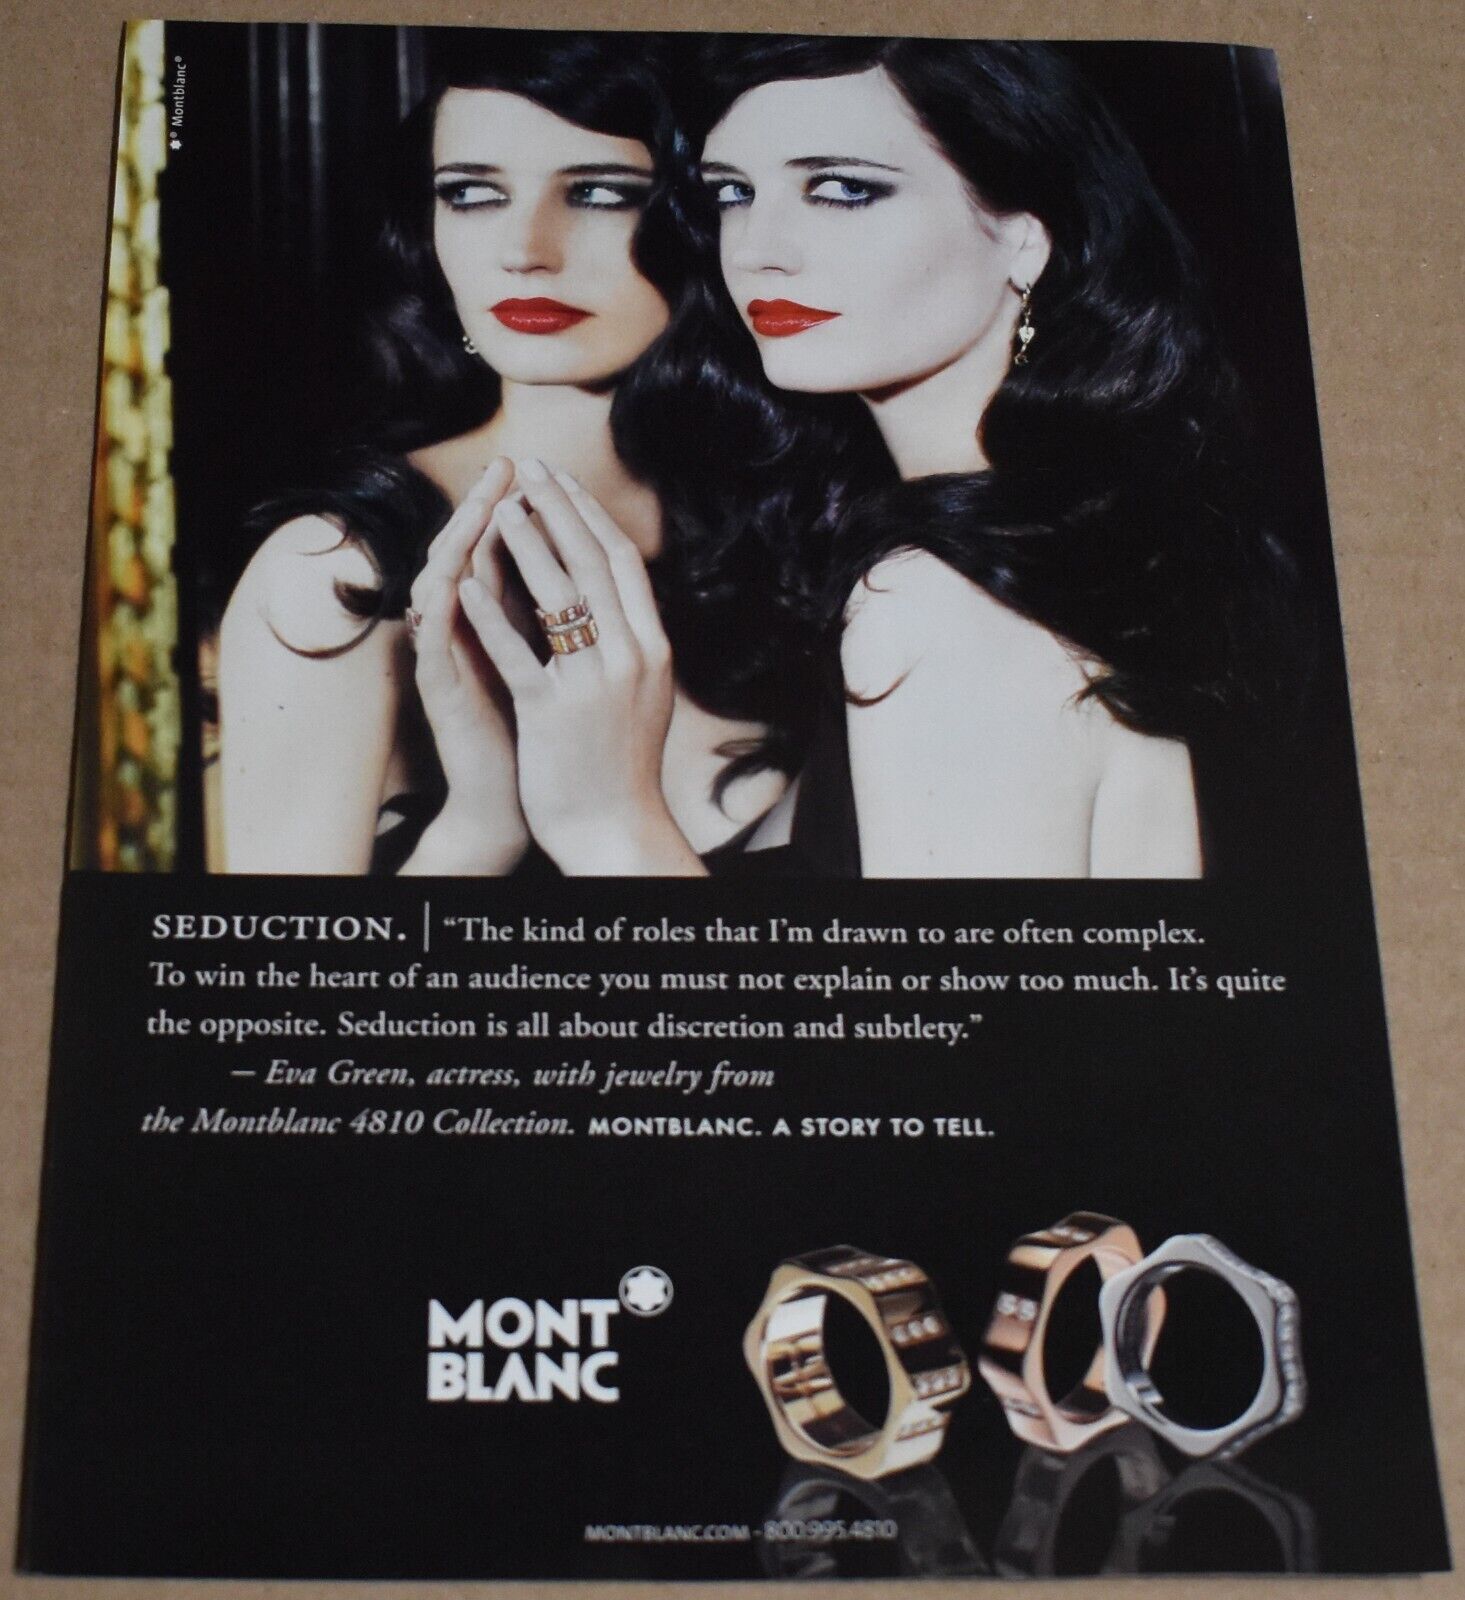 2008 Print Ad Mont Blanc Jewelry Eva Green Actress Seduction Beauty Art pinup